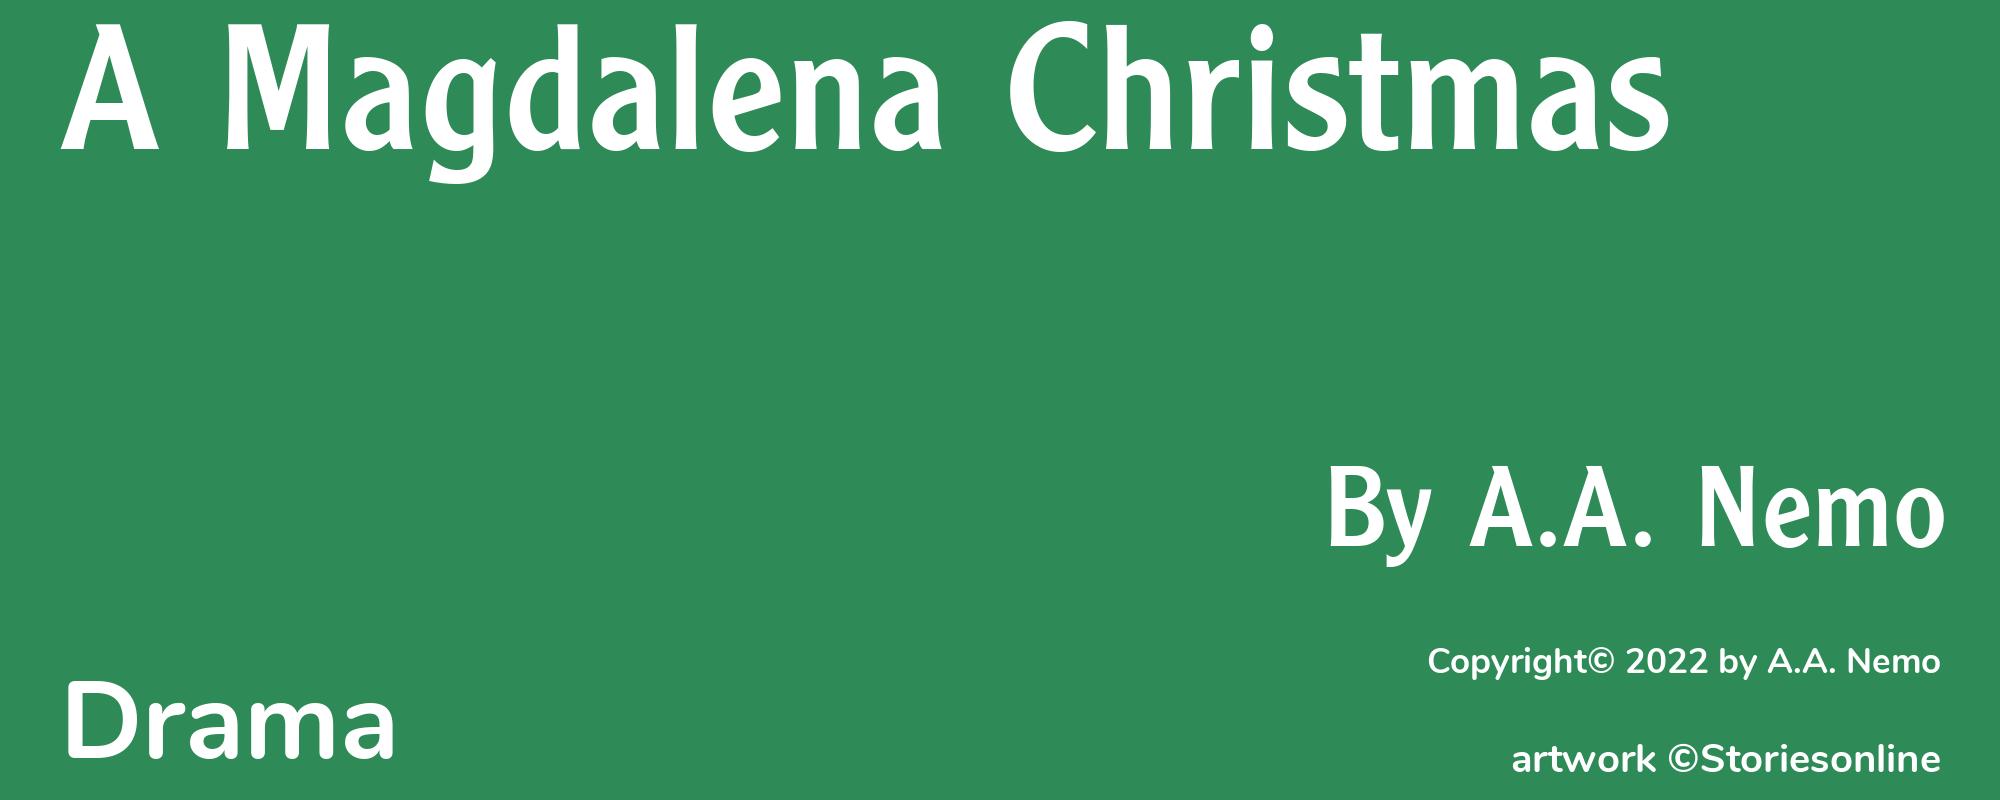 A Magdalena Christmas - Cover